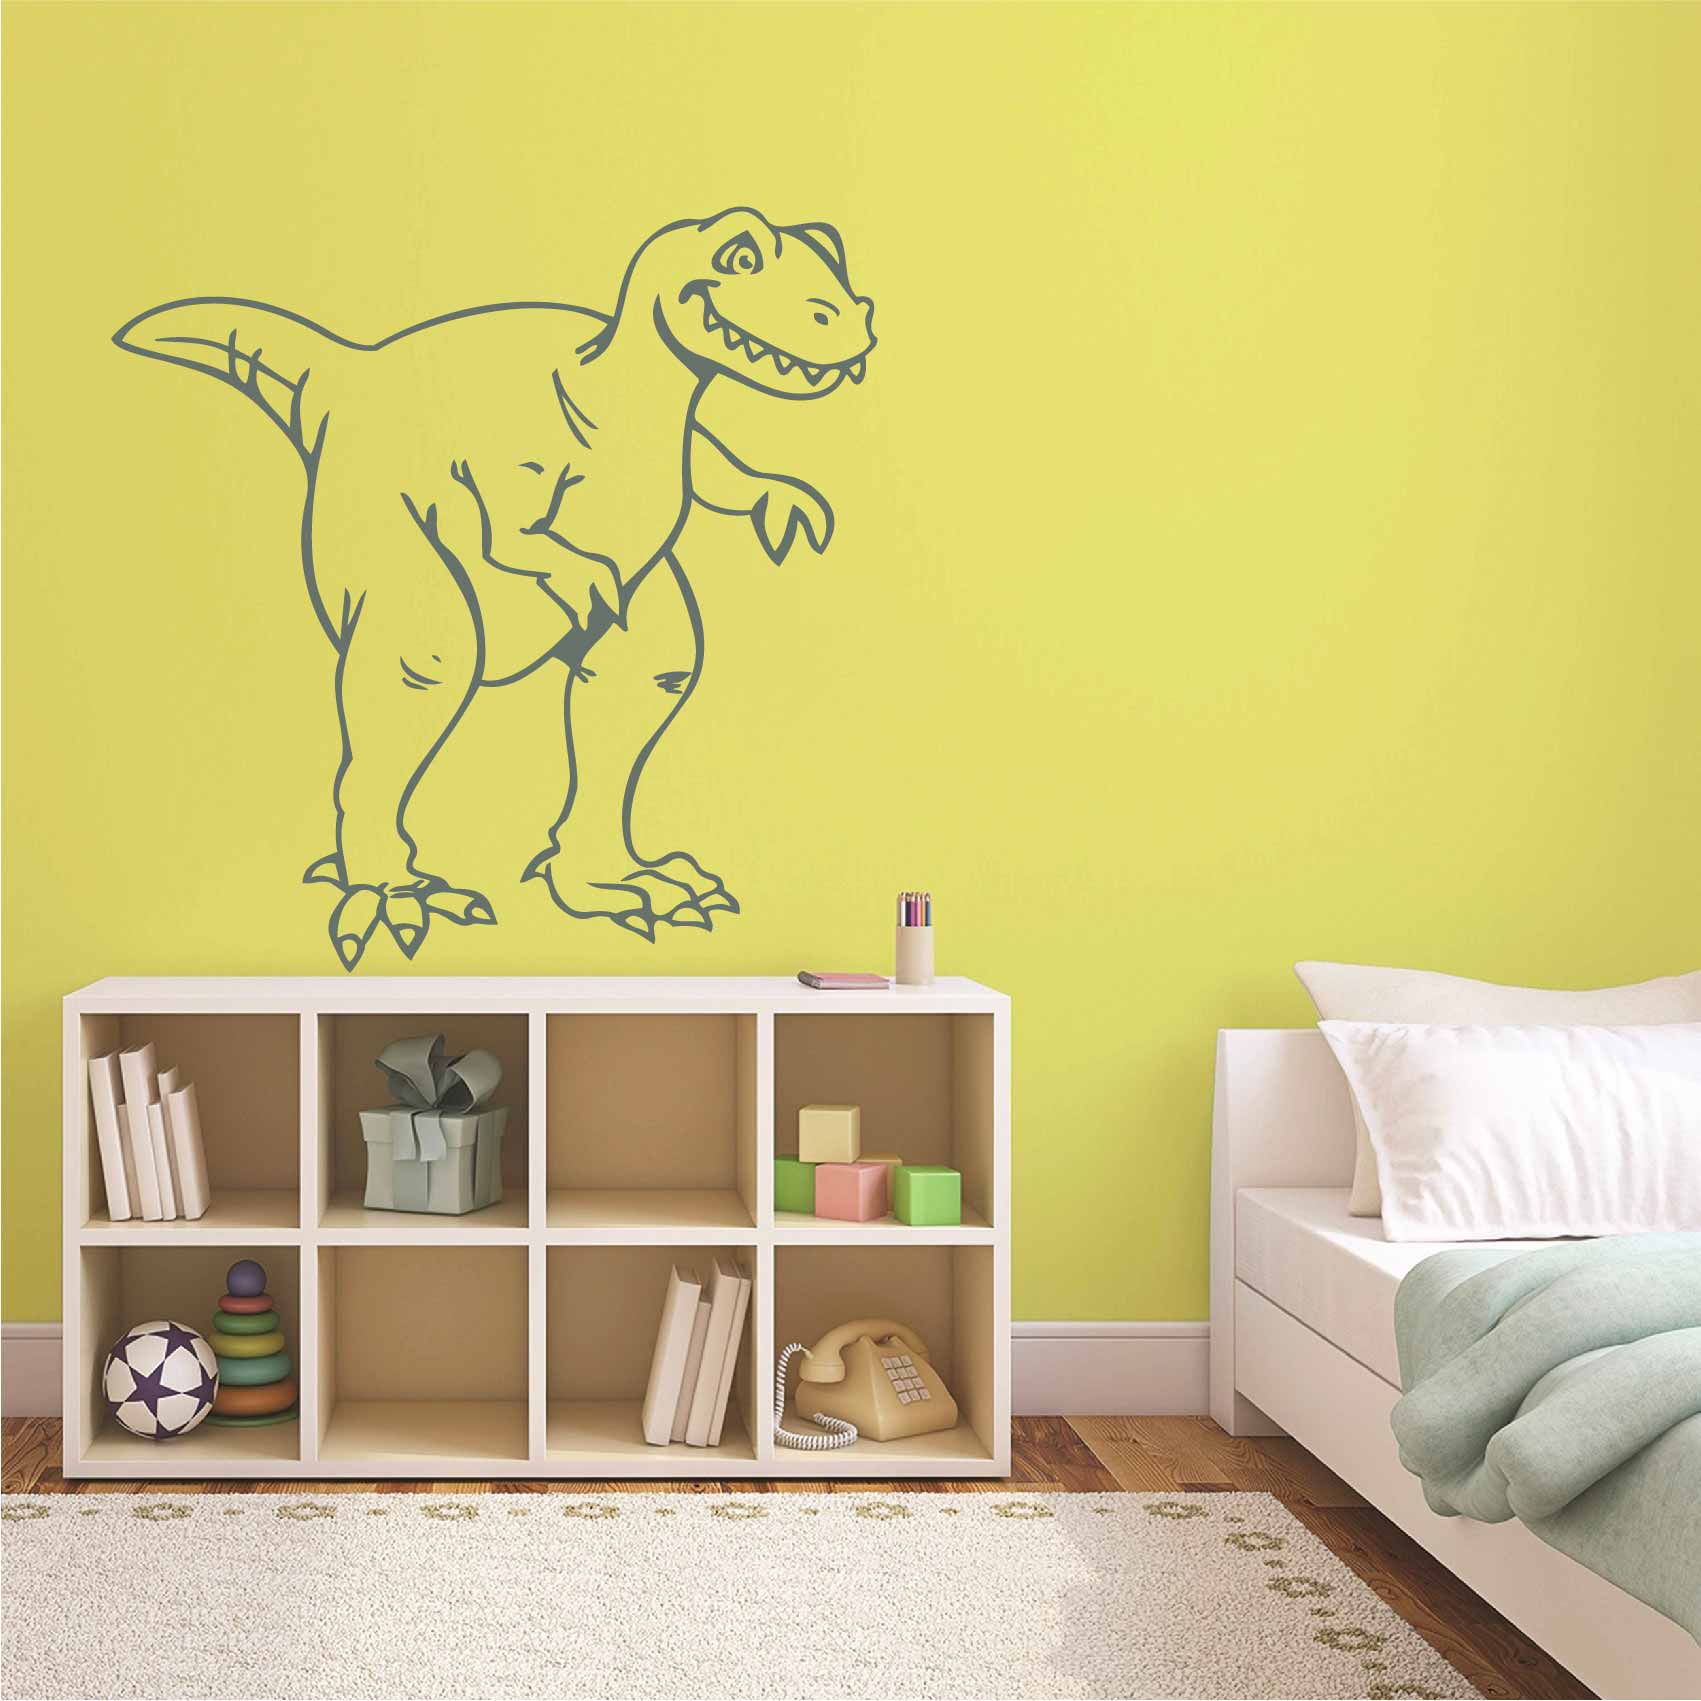 stickers-dinosaure-dessin-t-rex-ref17dinosaure-autocollant-muraux-chambre-enfant-sticker-mural-geant-dinosaures-deco-garçon-fille